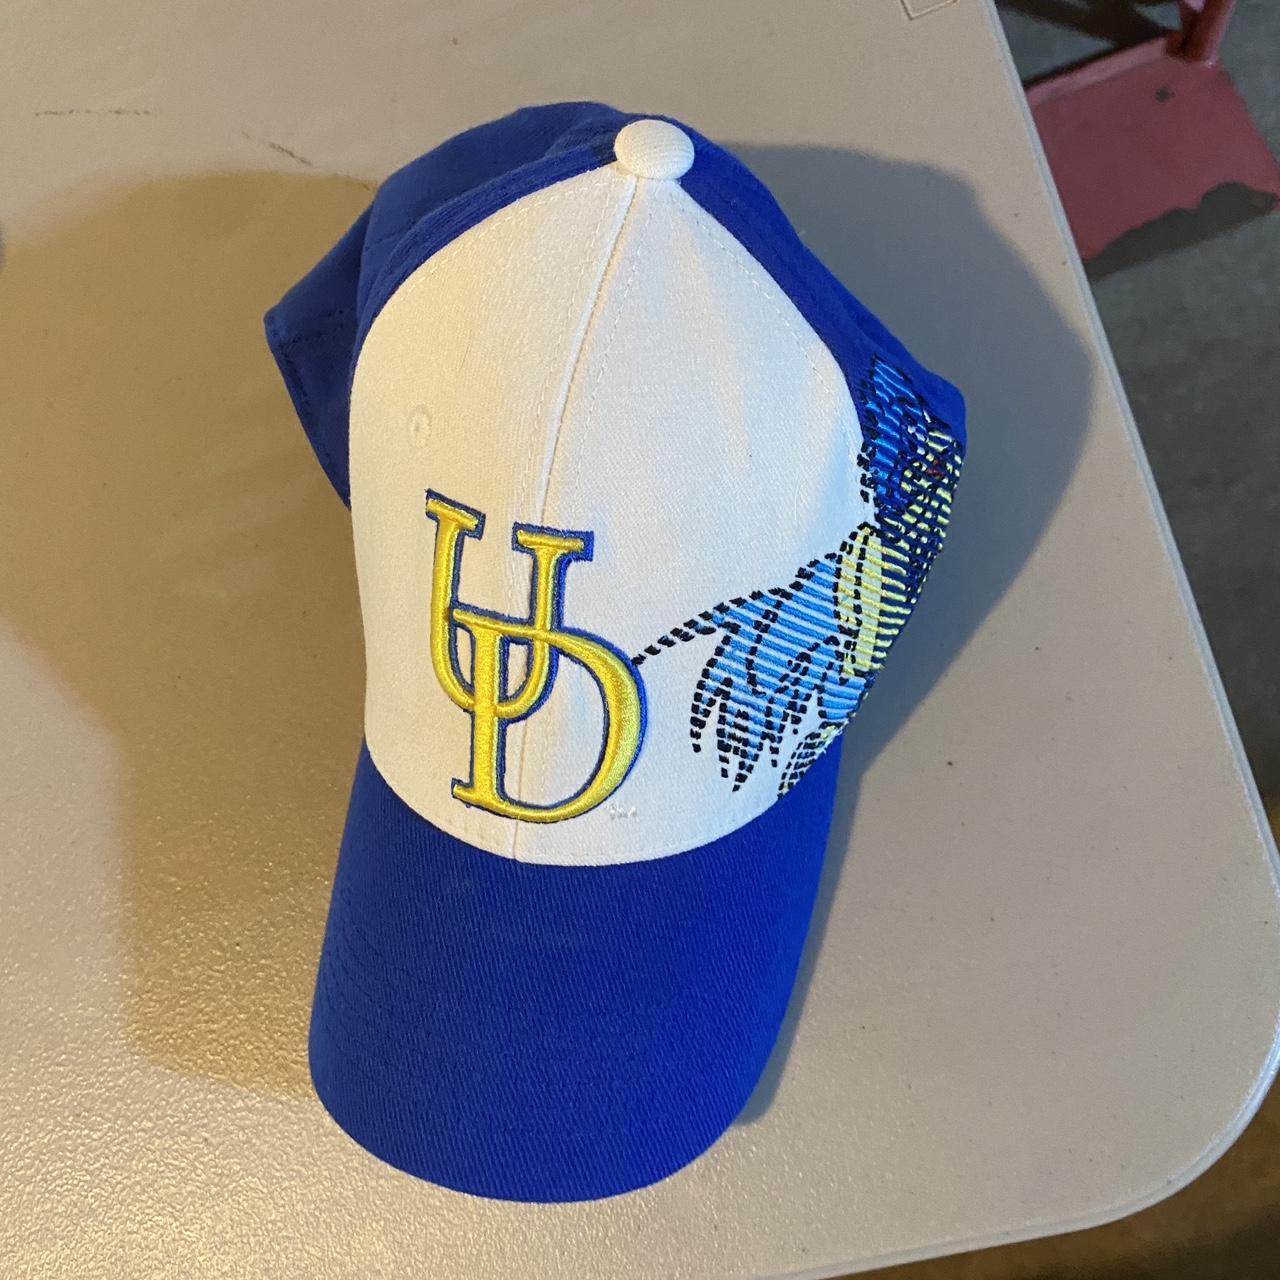 University of Delaware Hats, University of Delaware Caps